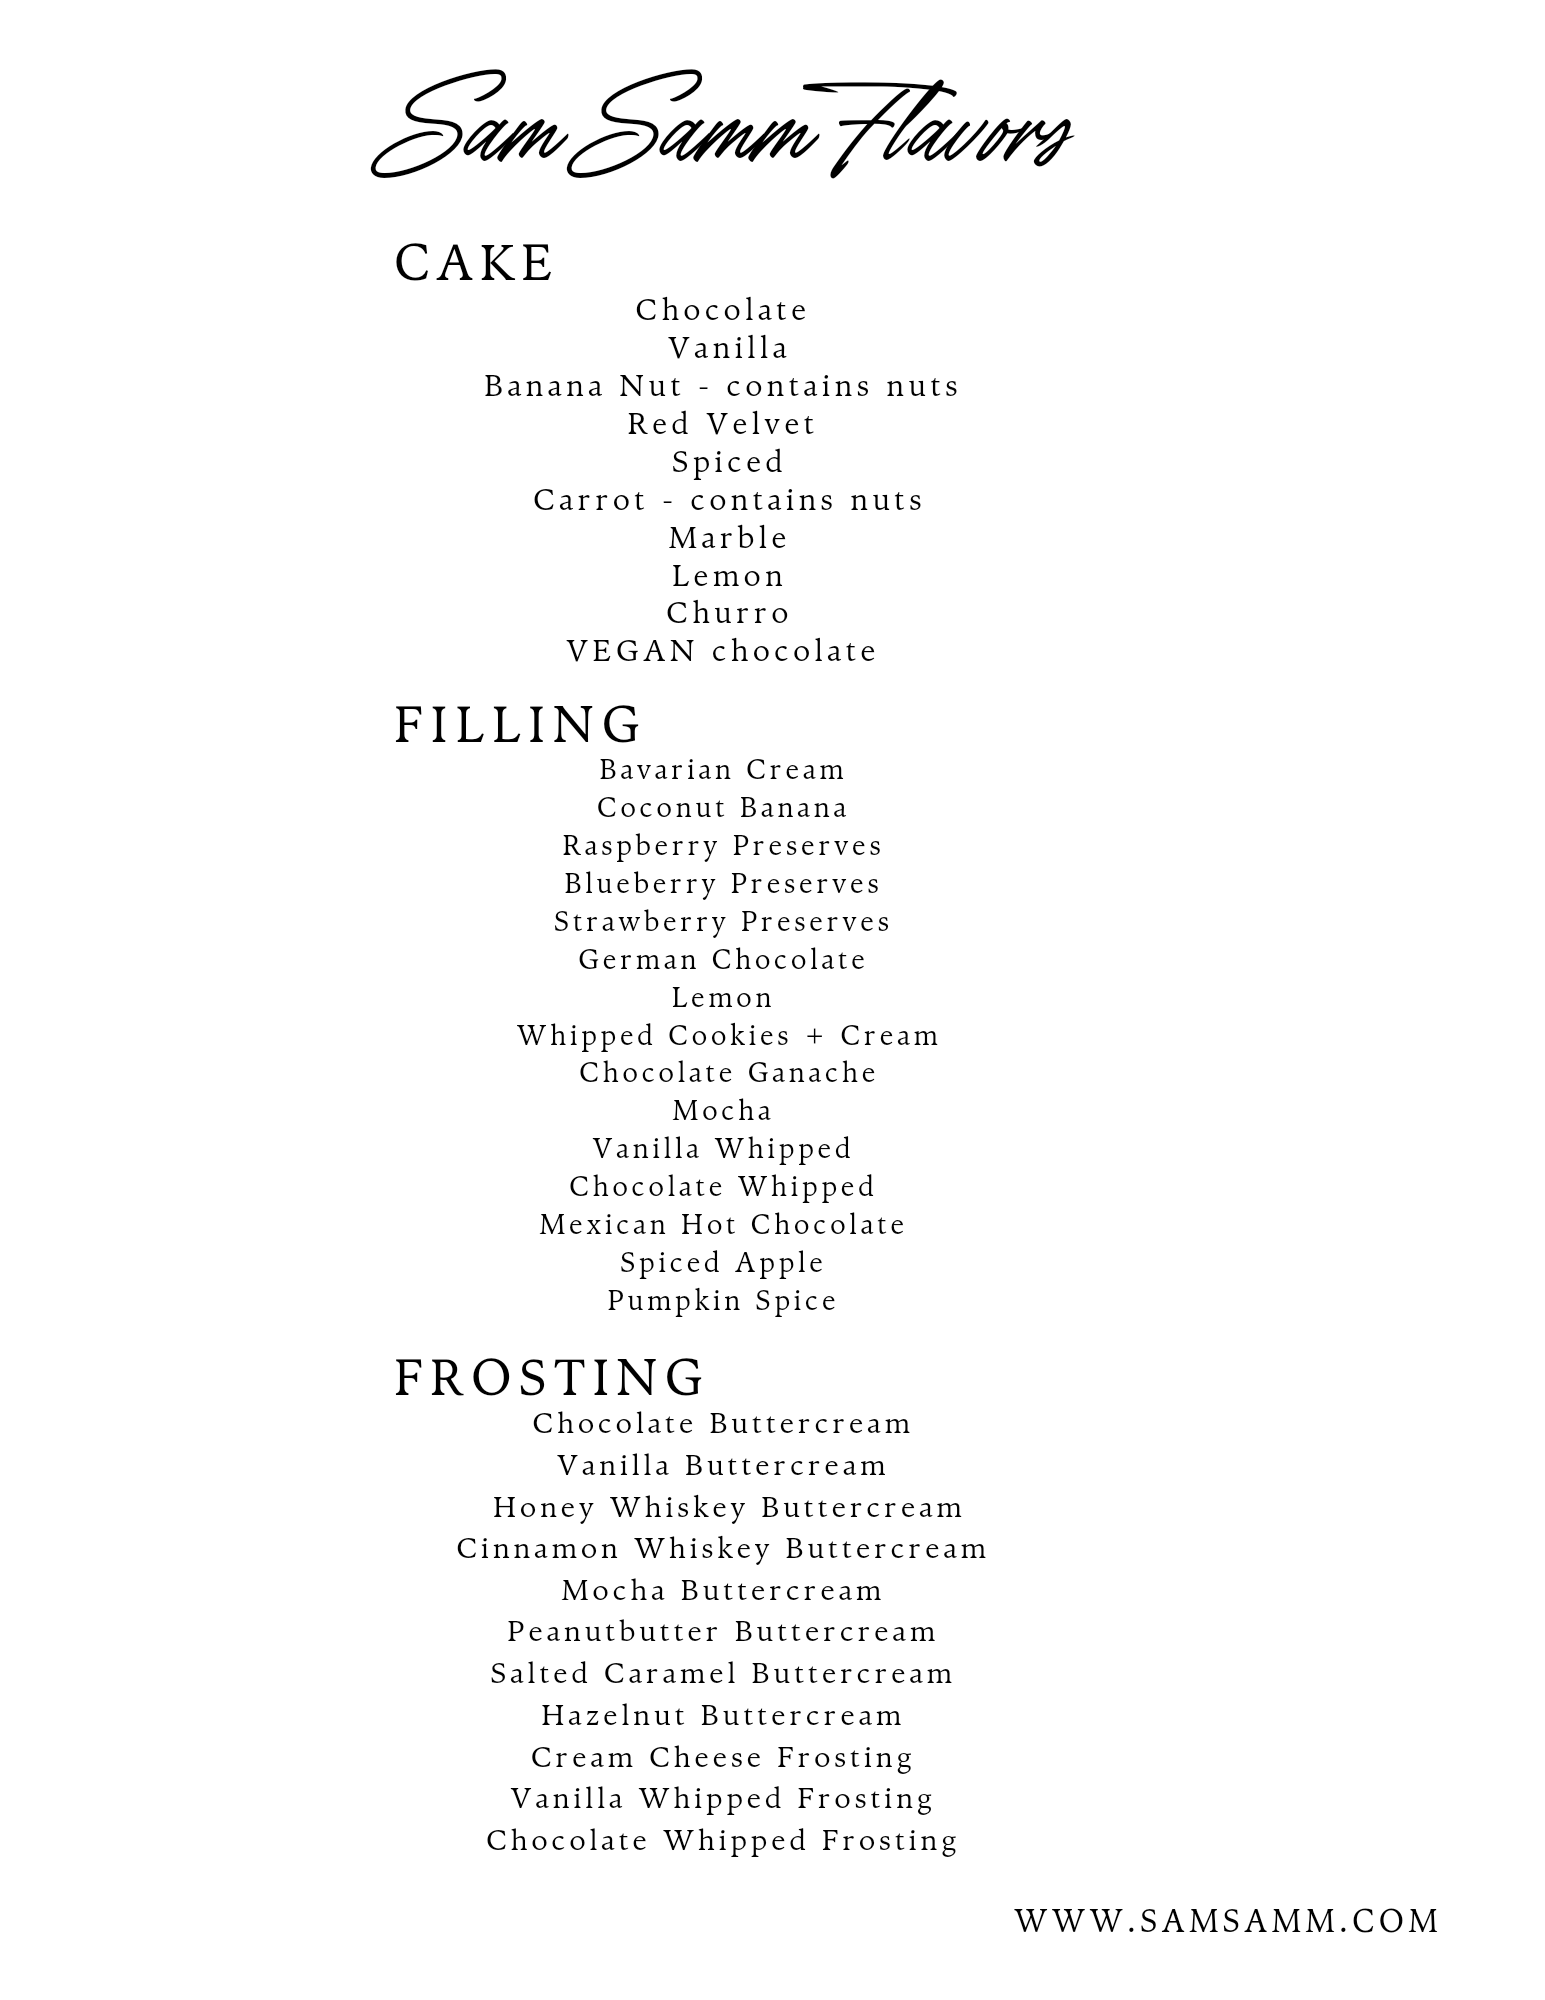 31 Unique Wedding Cake Flavors to Consider